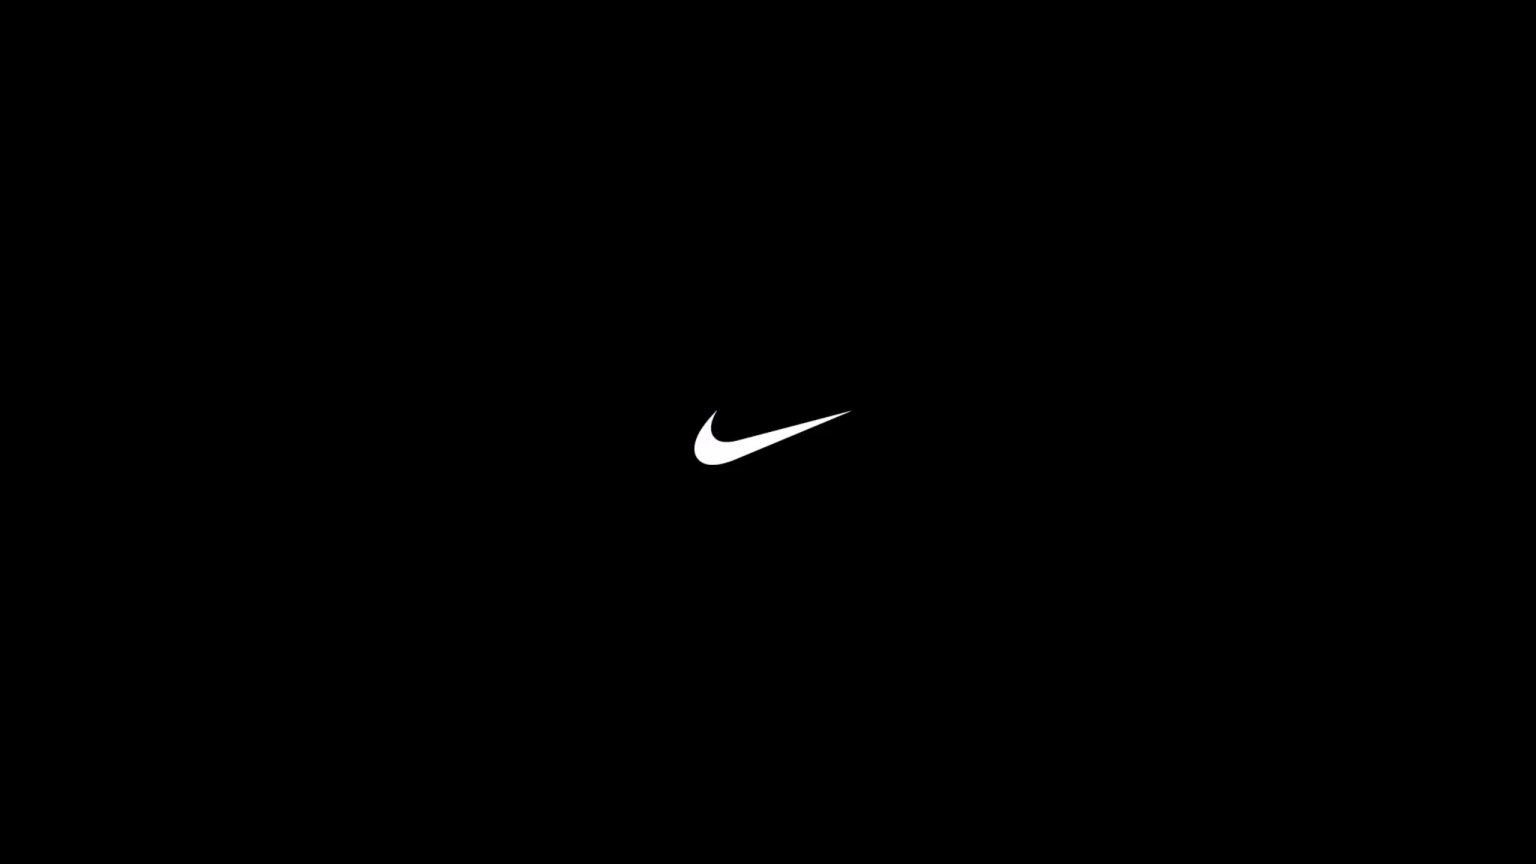 Simple Nike Logo for 1536 x 864 HDTV resolution